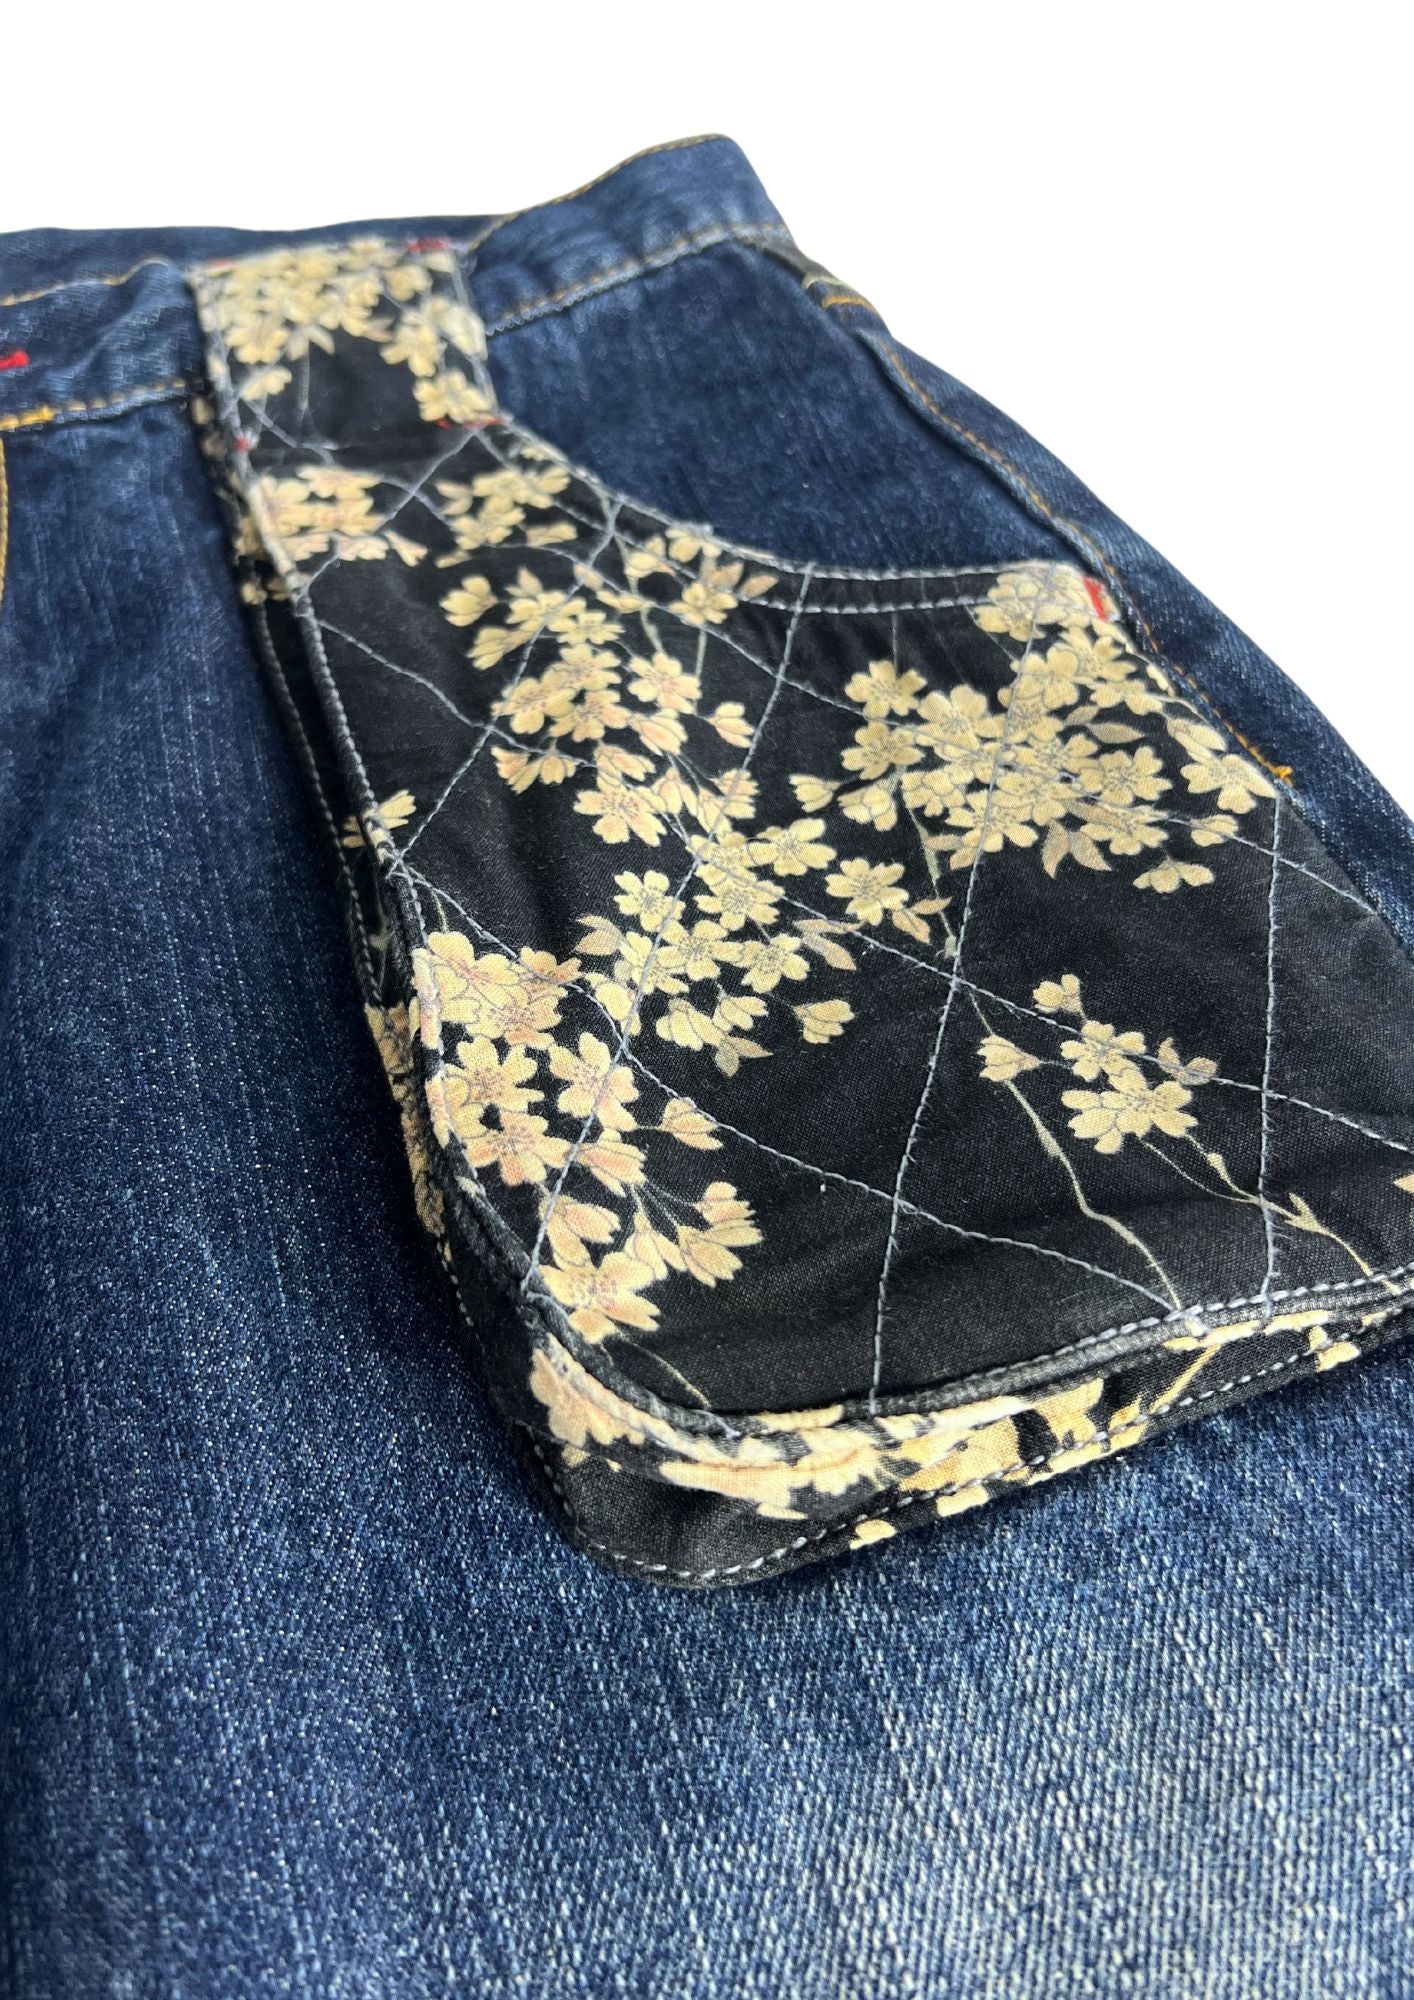 2000s INFINITY Cherry Blossom Kimono Patch Denim Jeans